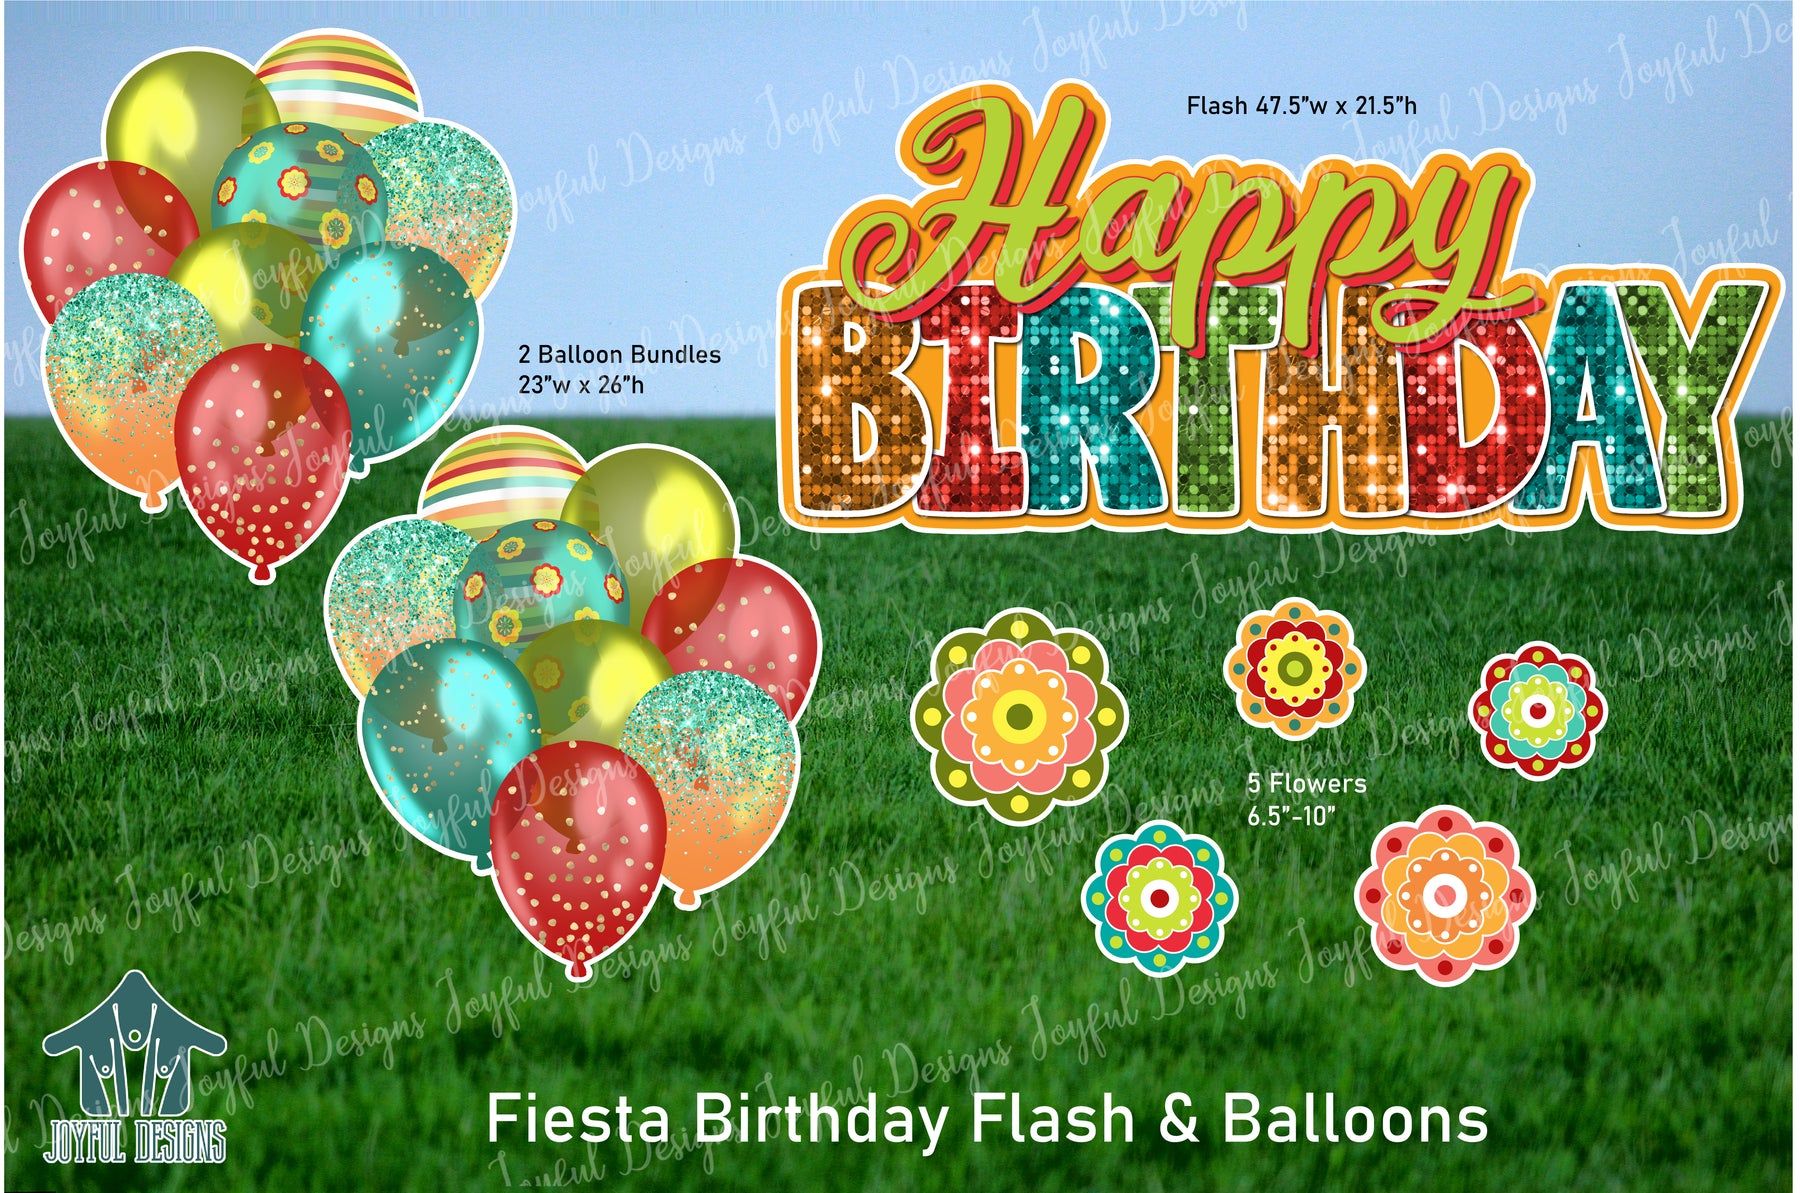 Fiesta Birthday Centerpiece & Balloons